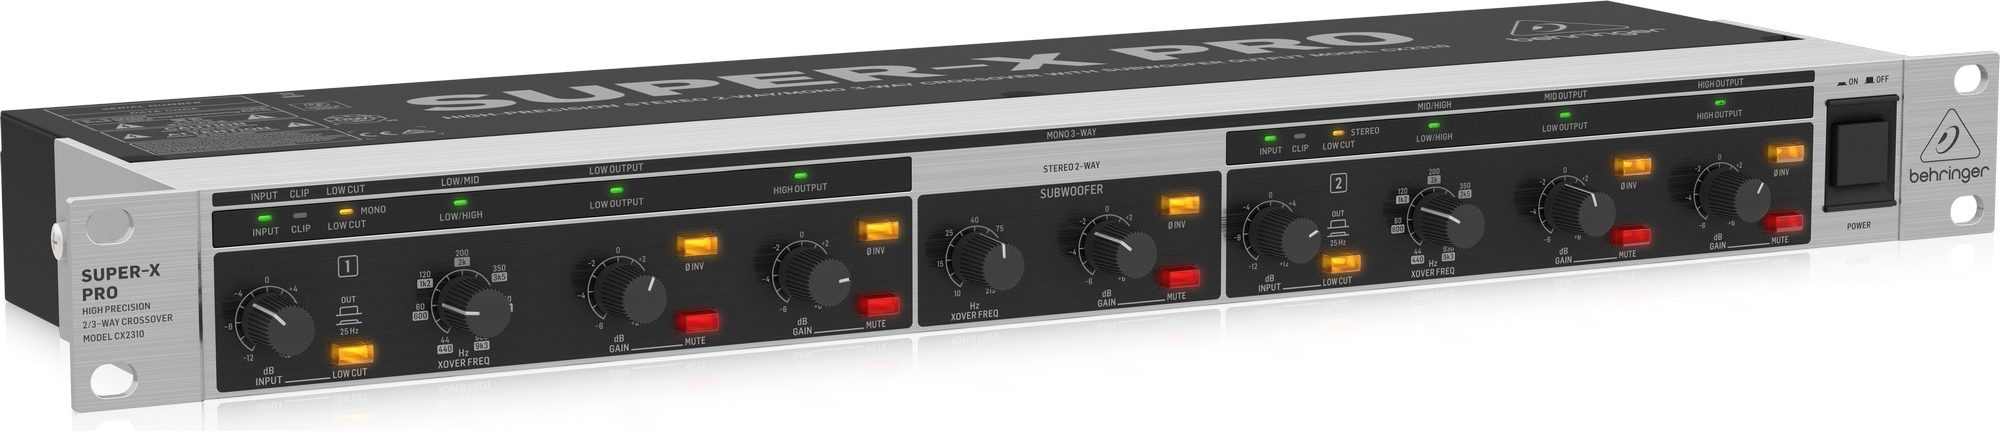 Behringer Super-X Pro CX2310 V2 Stereo 2-Way/Mono 3-Way Crossover